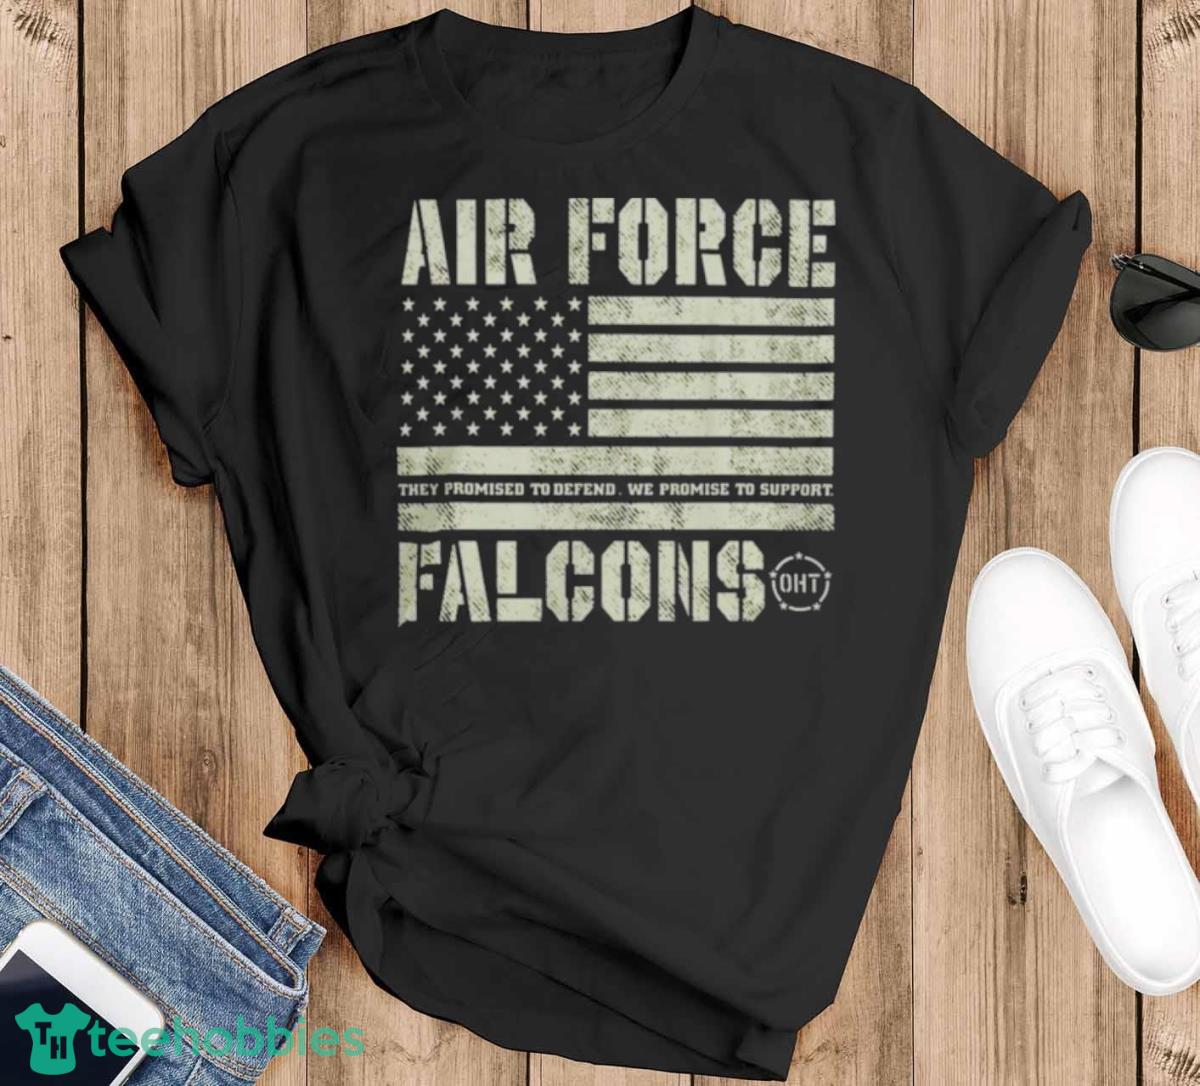 Air Force Falcons X Oht Military Appreciation Comfort Shirt - Black T-Shirt